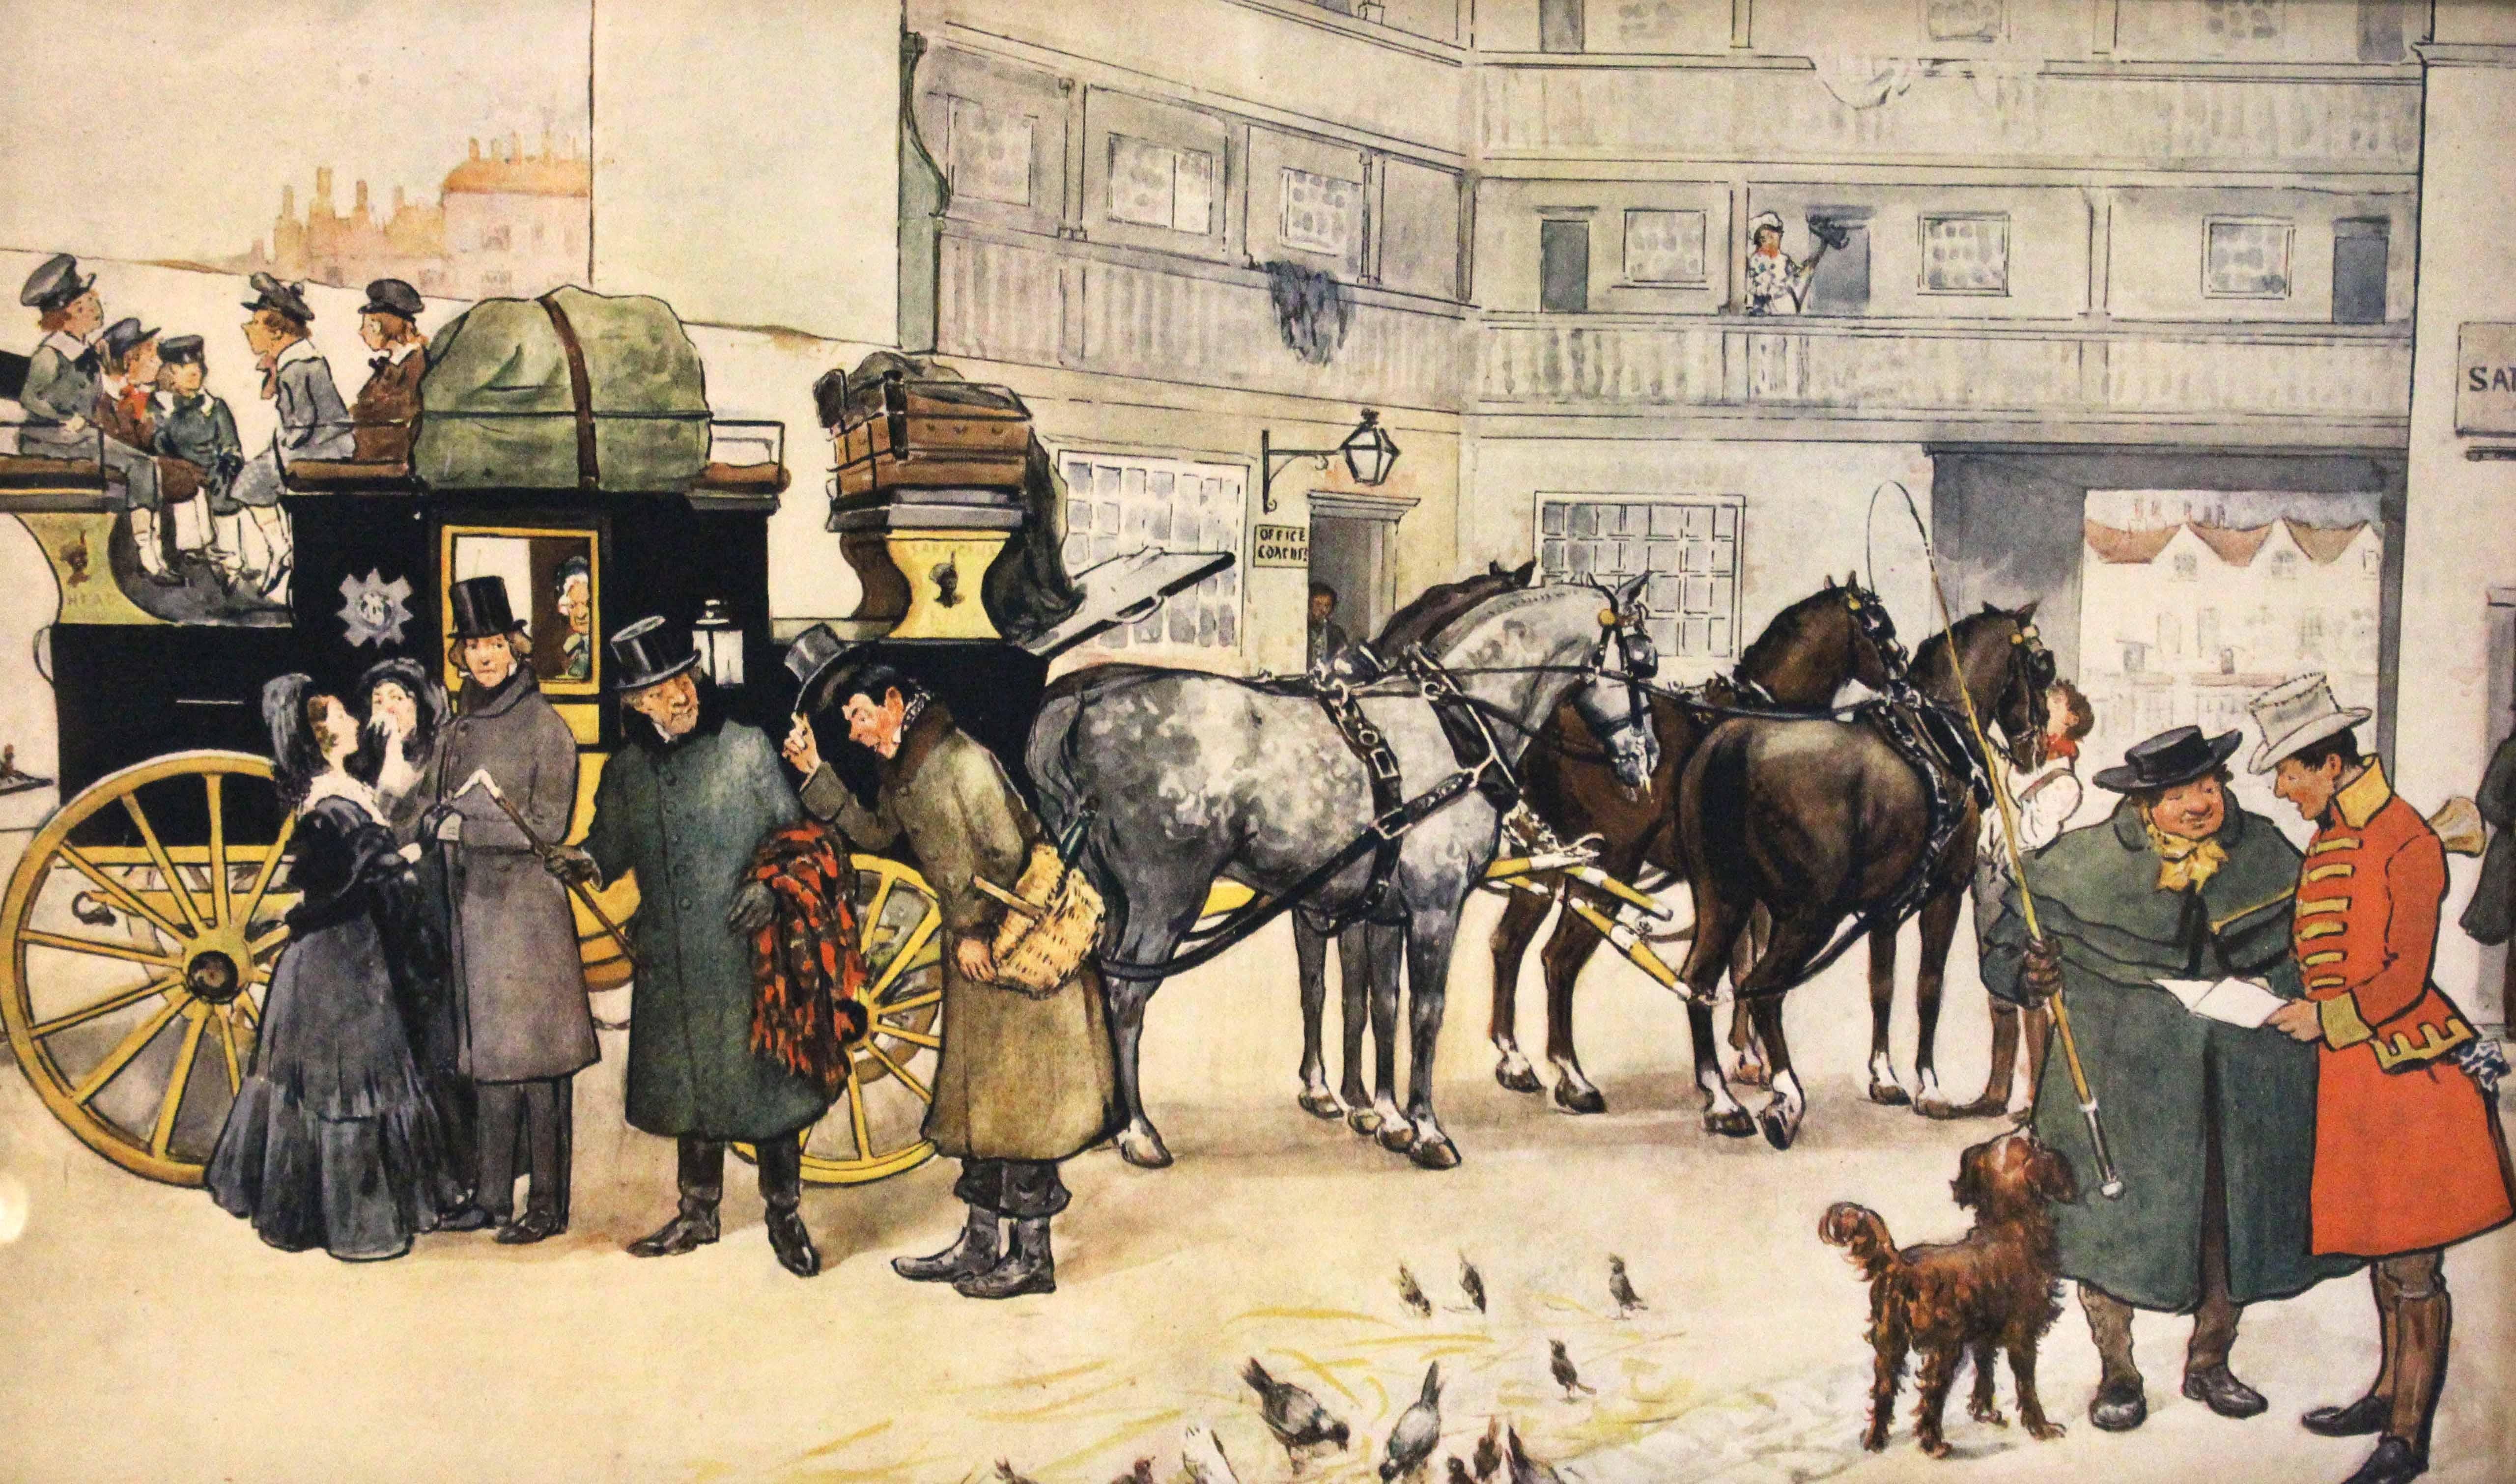 English Nicholas Nickleby's Departure for Dotheboys Hall Print, 1902 series